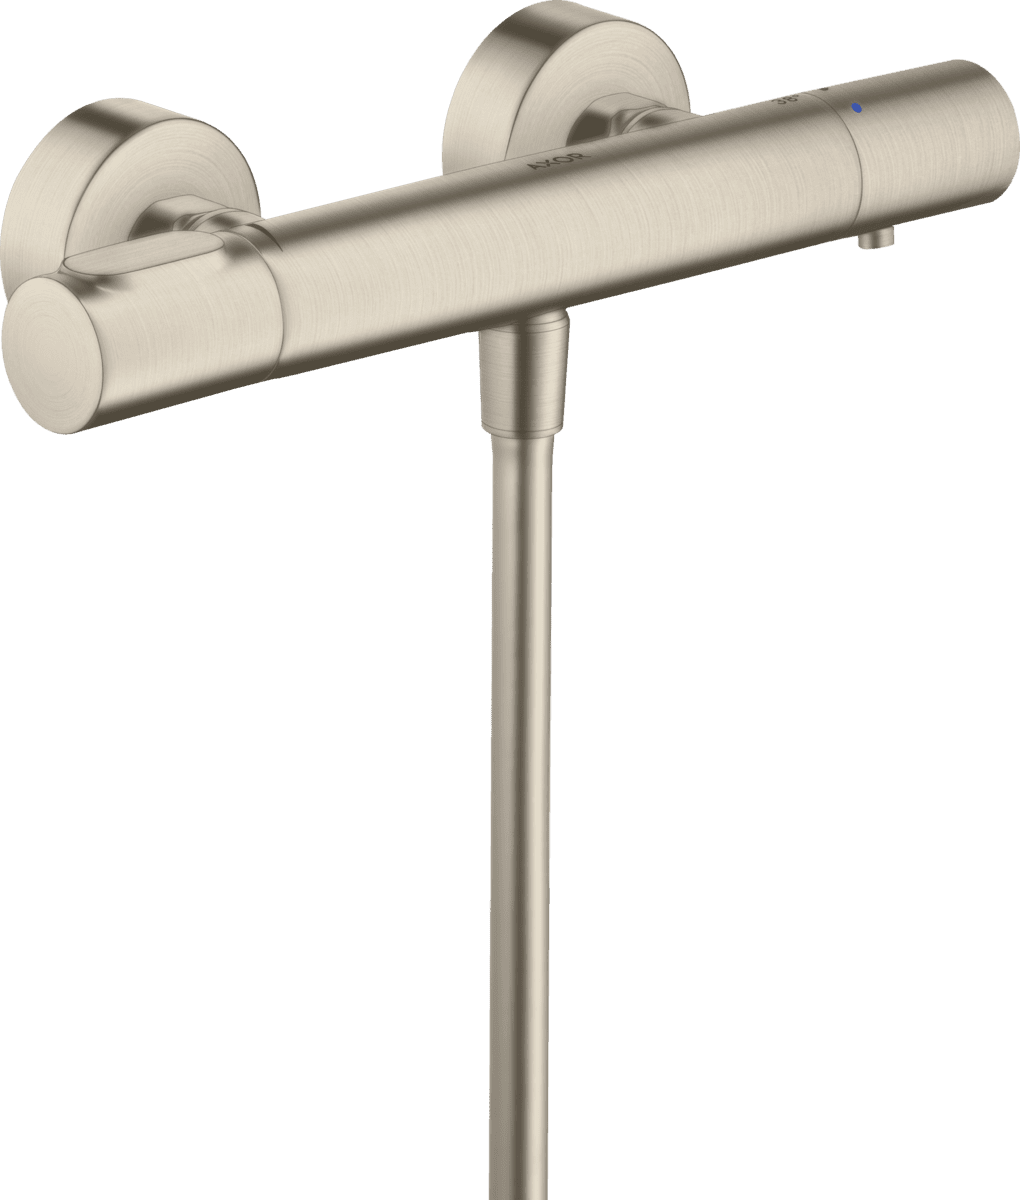 HANSGROHE AXOR Citterio M Termostatik duş bataryası aplike montaj #34635820 - Mat Nikel resmi